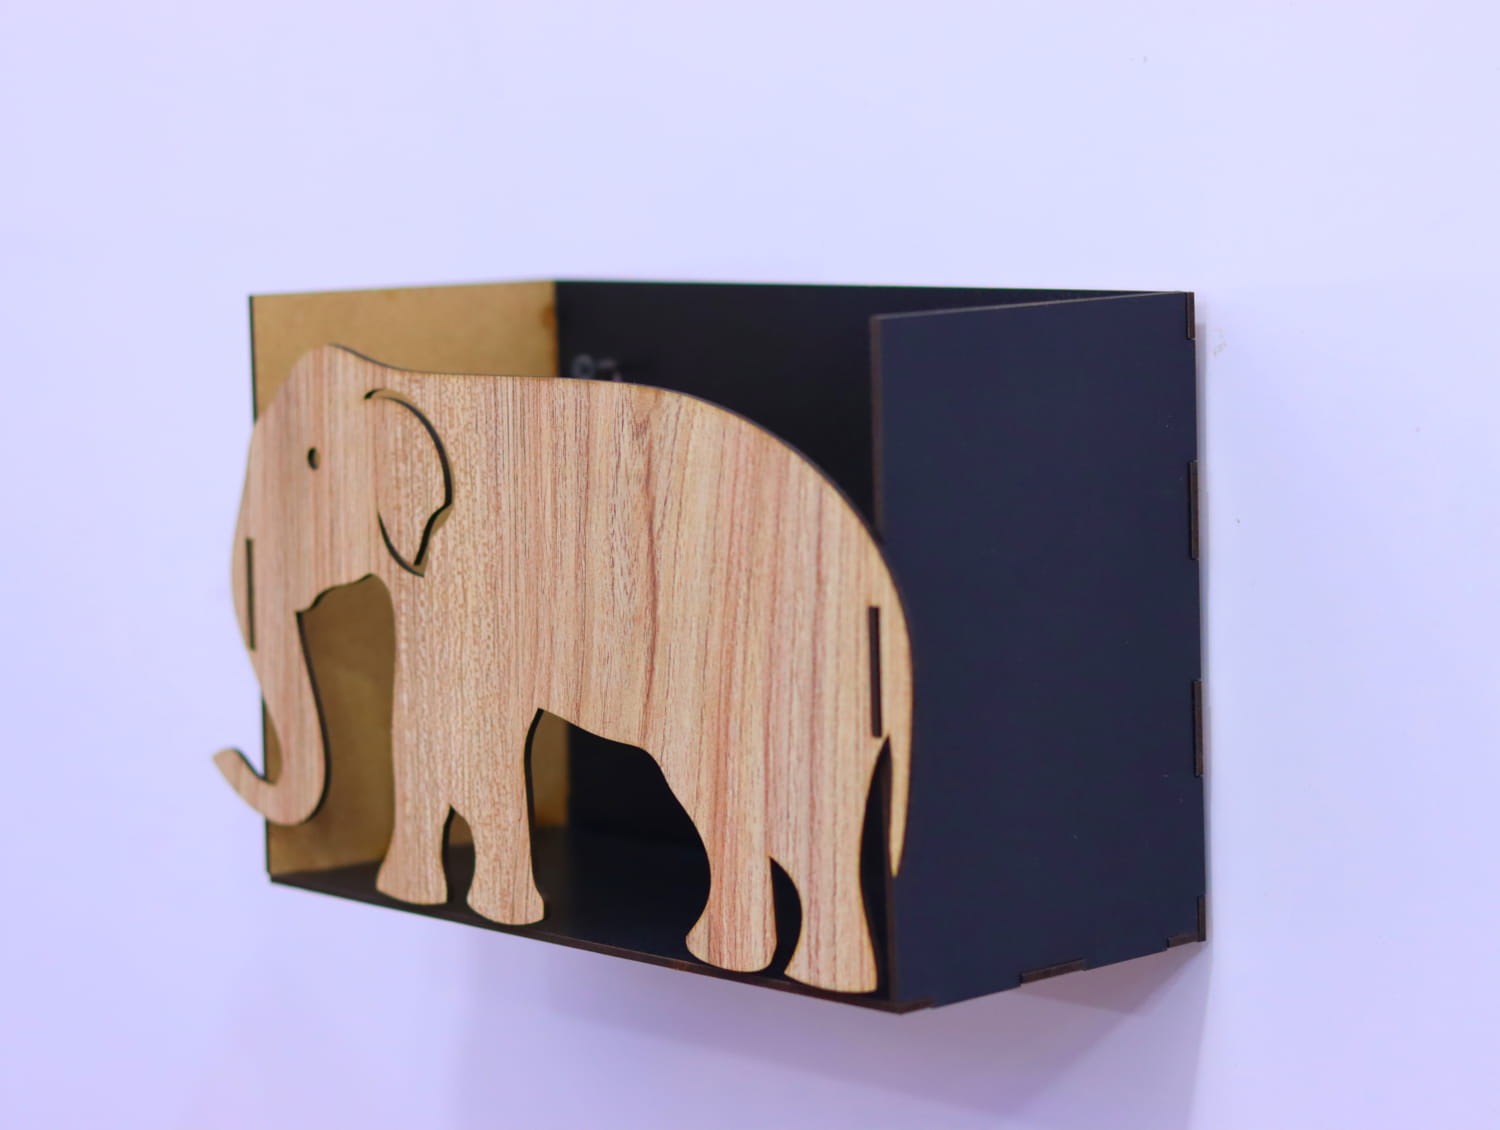 Laser Cut Elephant Wall Shelf Free Vector